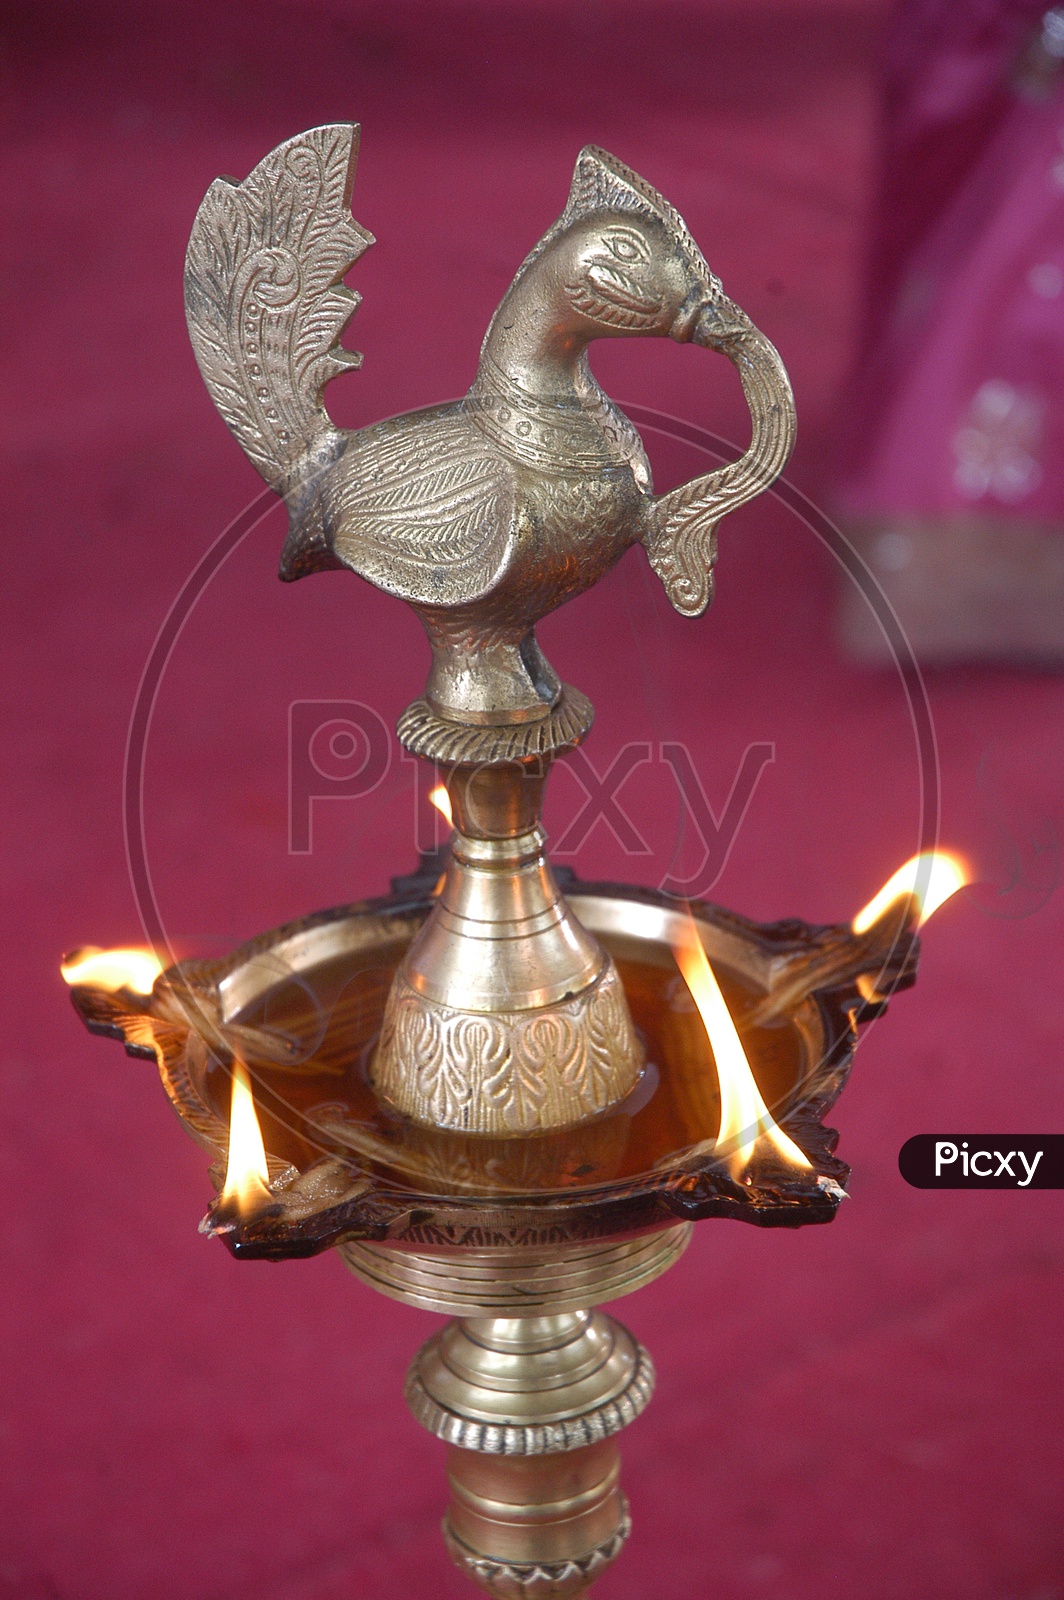 Diya - Deepam used for Puja